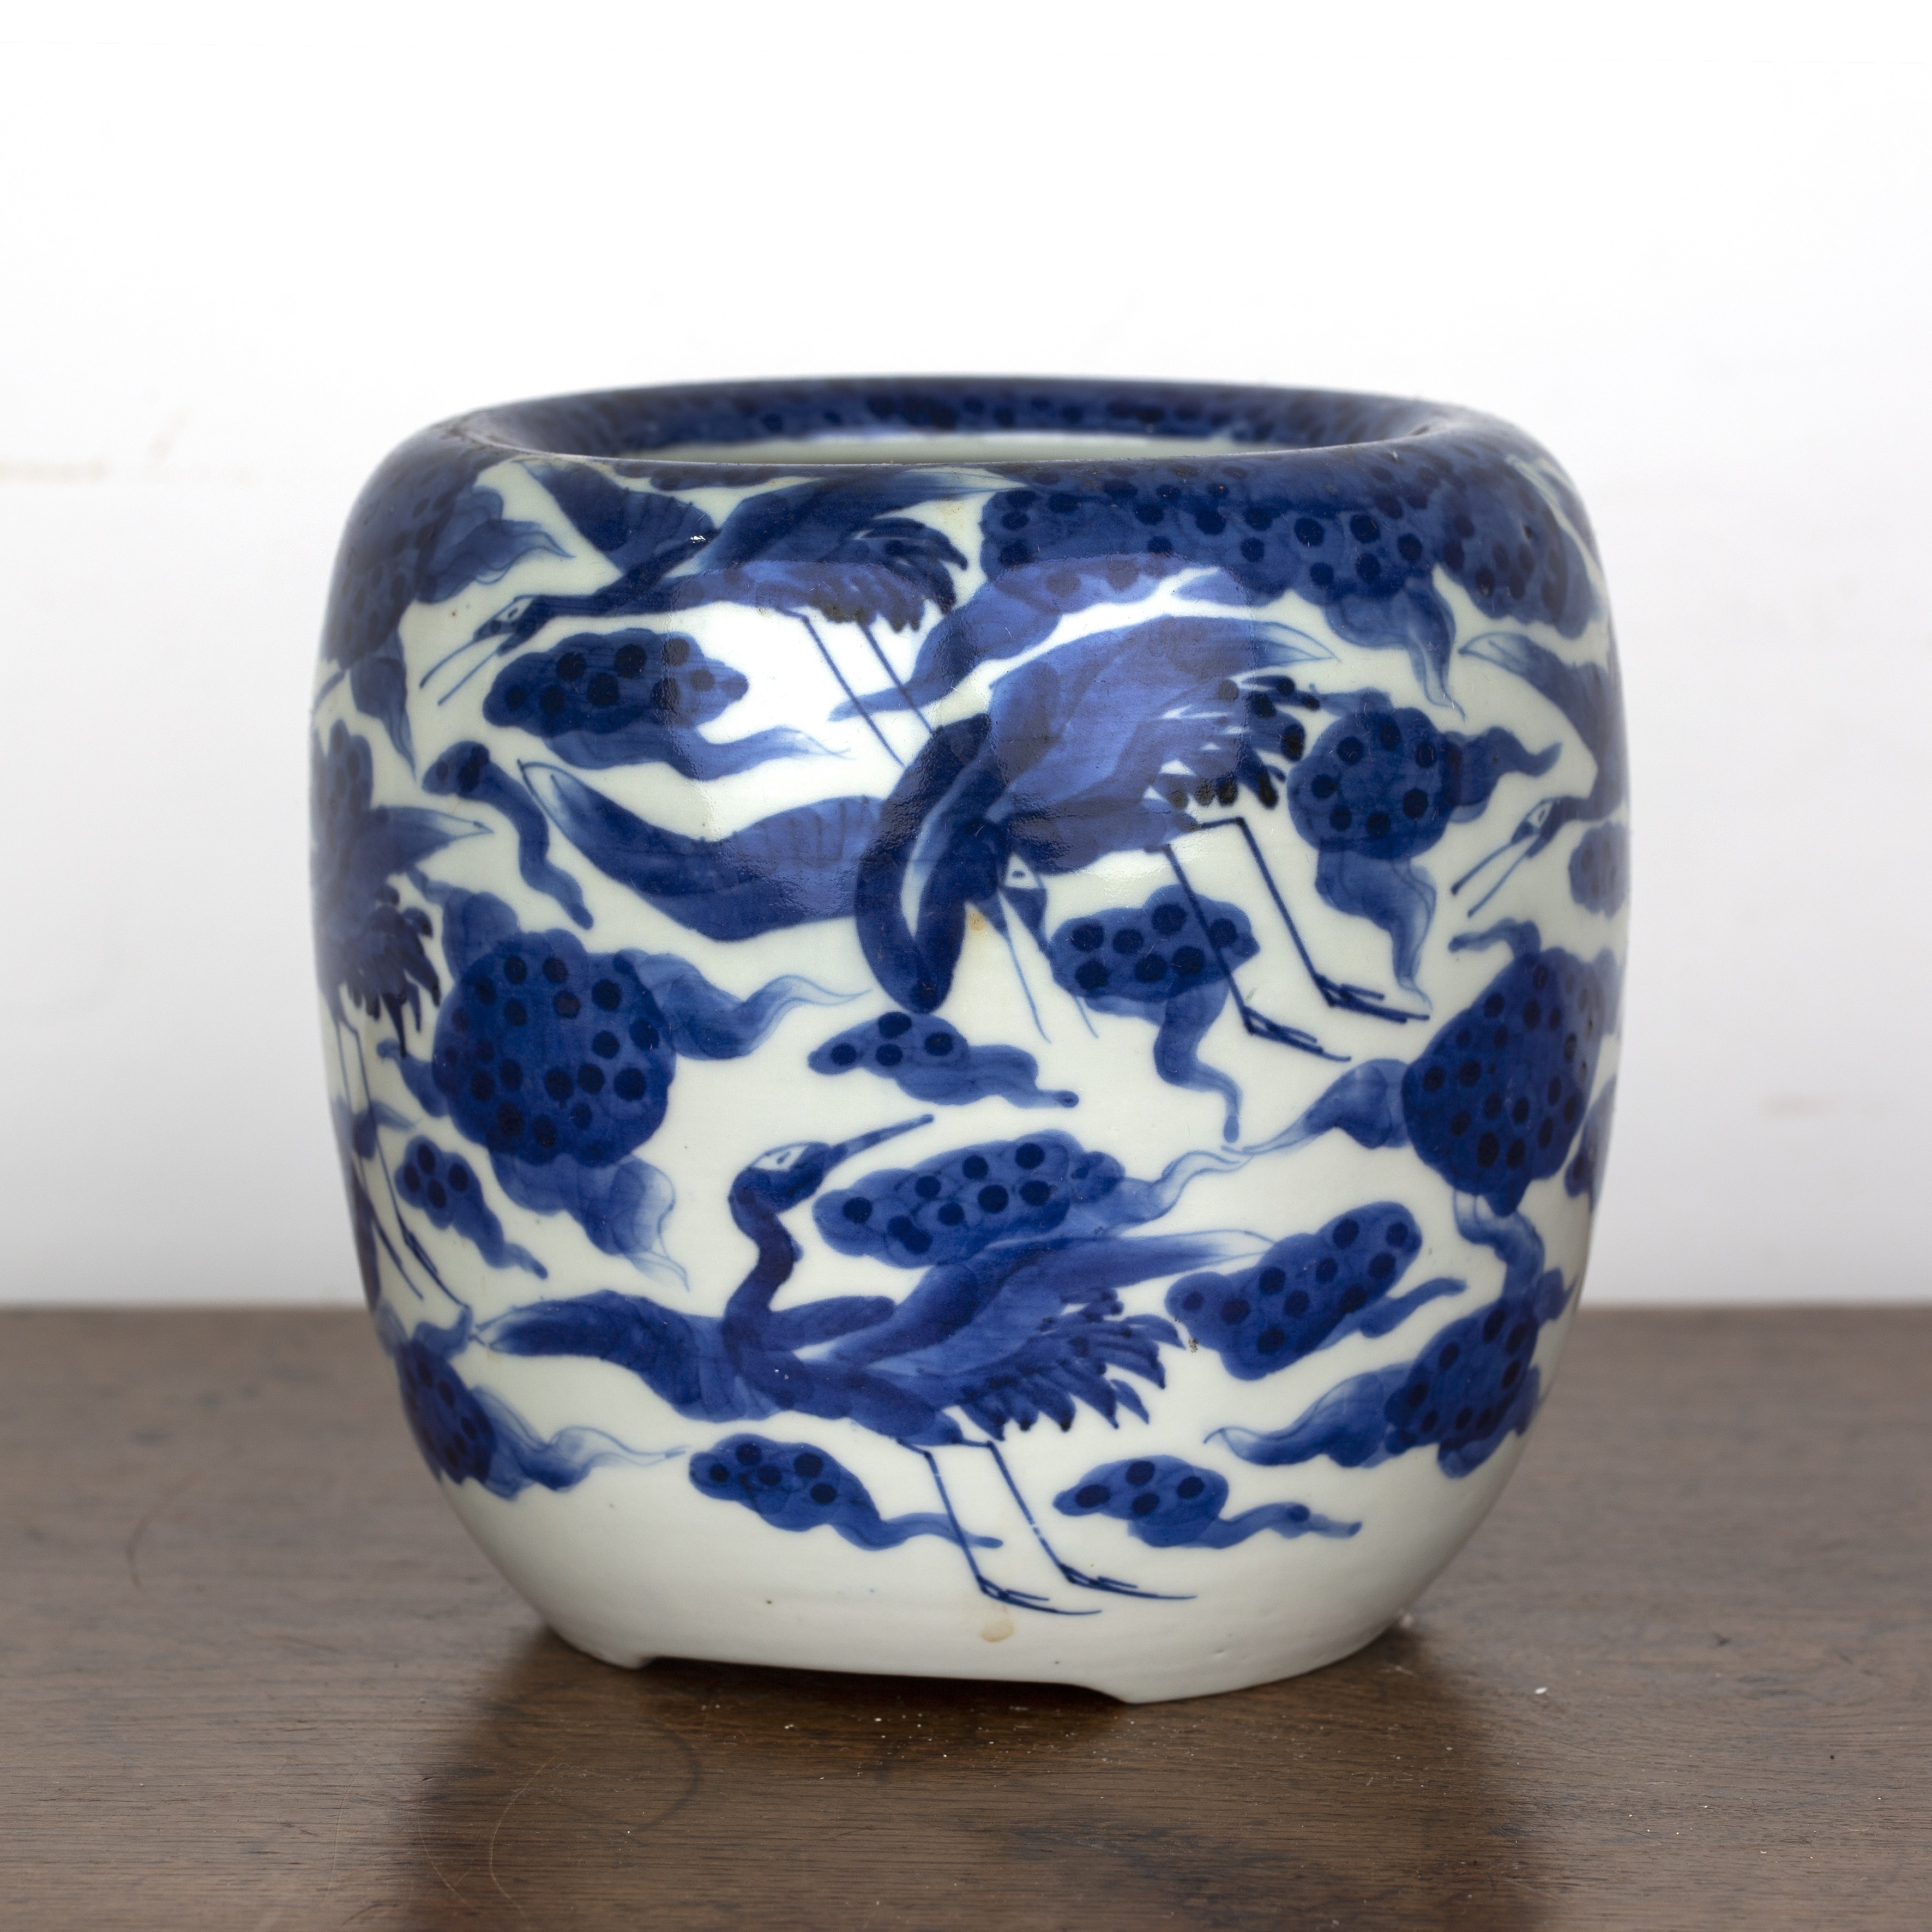 Blue and white porcelain jar Japanese painted with cranes in flight, 16.5cm high x 16.5cm diameter - Bild 2 aus 4